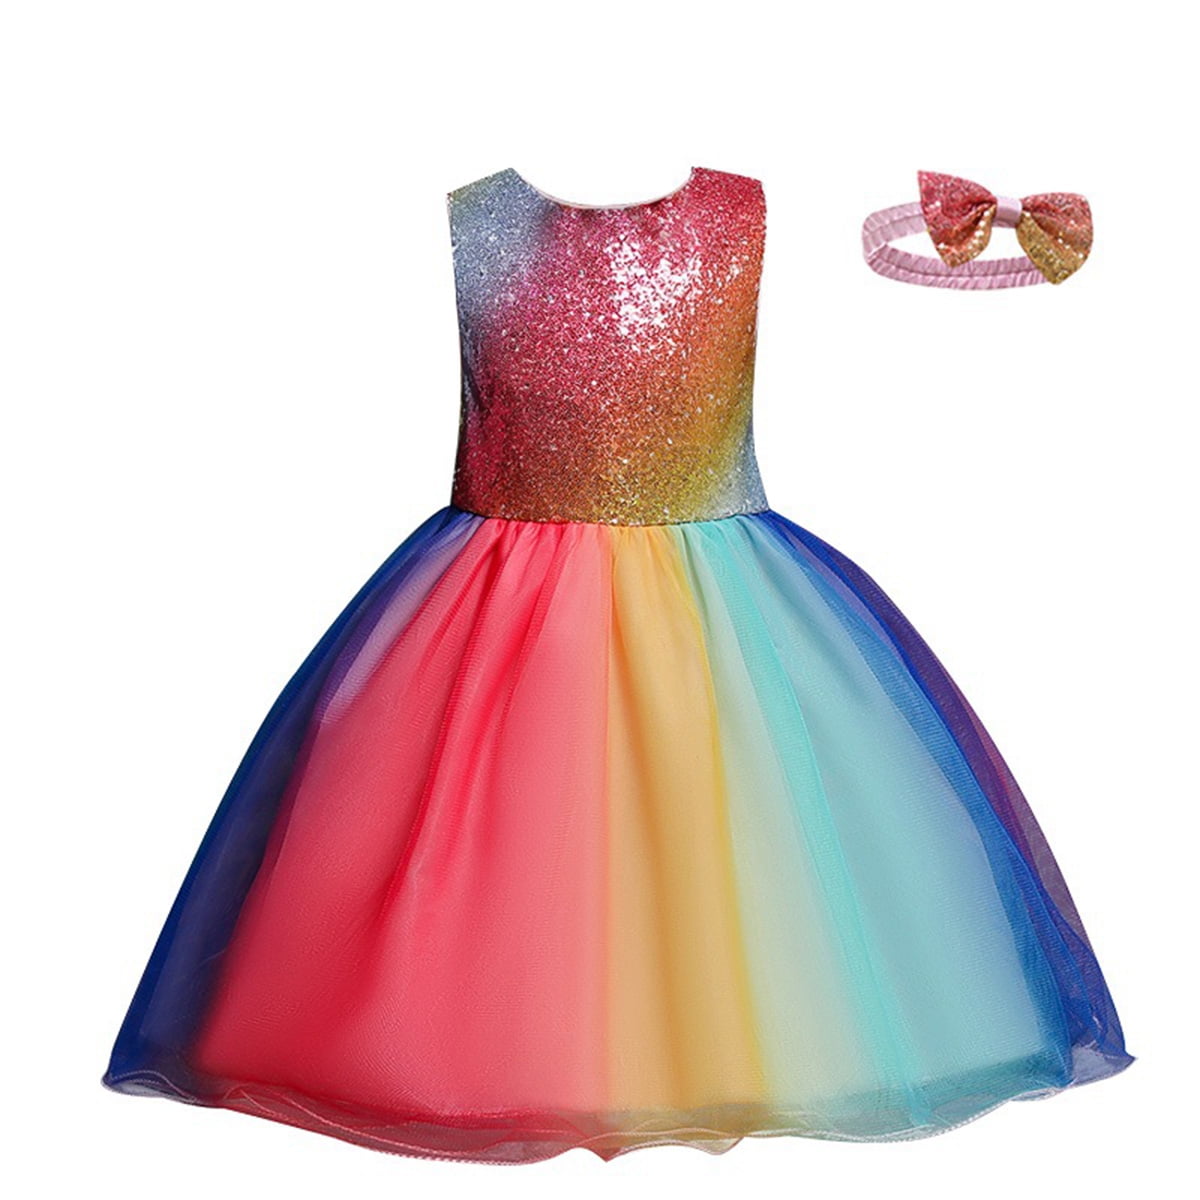 Toddler Kids Girls Summer Dot Print Princess Dress Bowknot Sleeveless Playwear Sundress for 3-9 Years Old